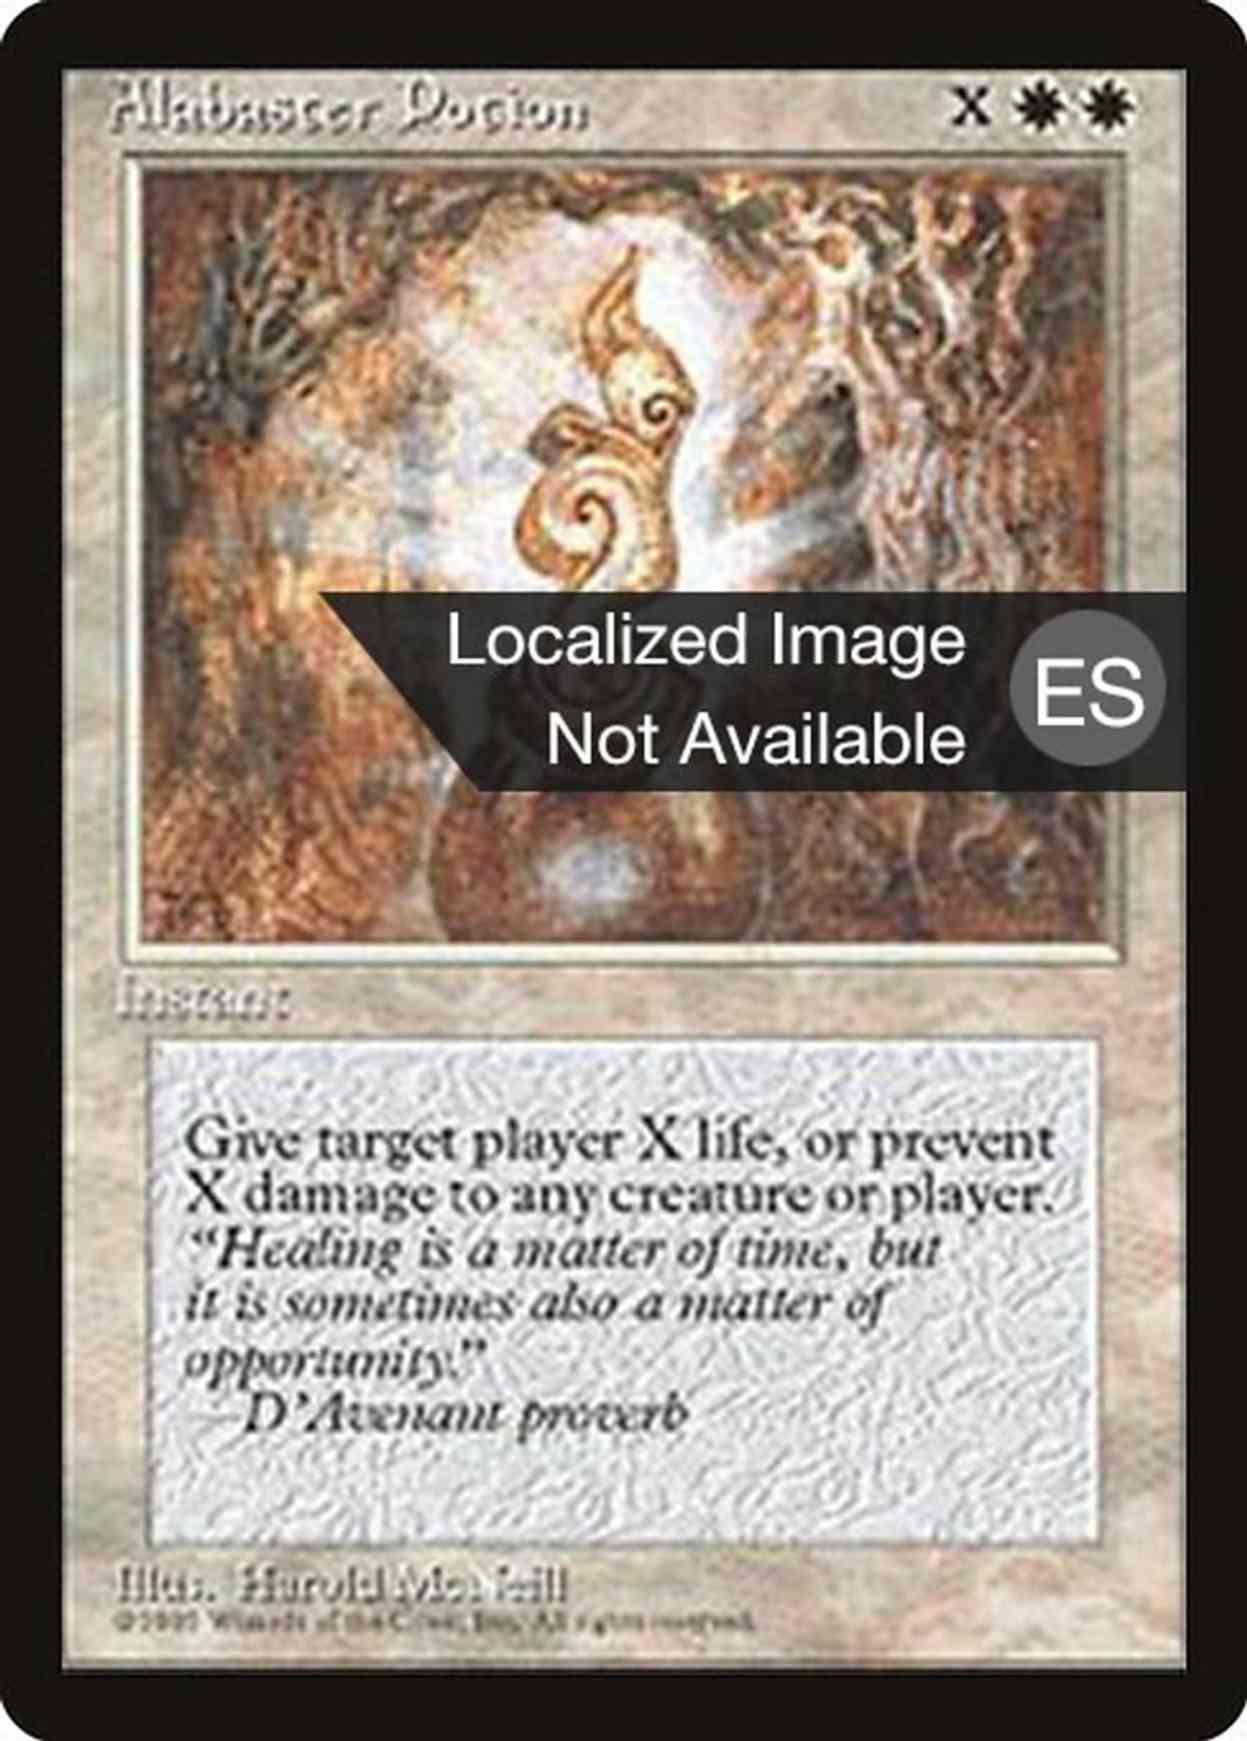 Alabaster Potion magic card front